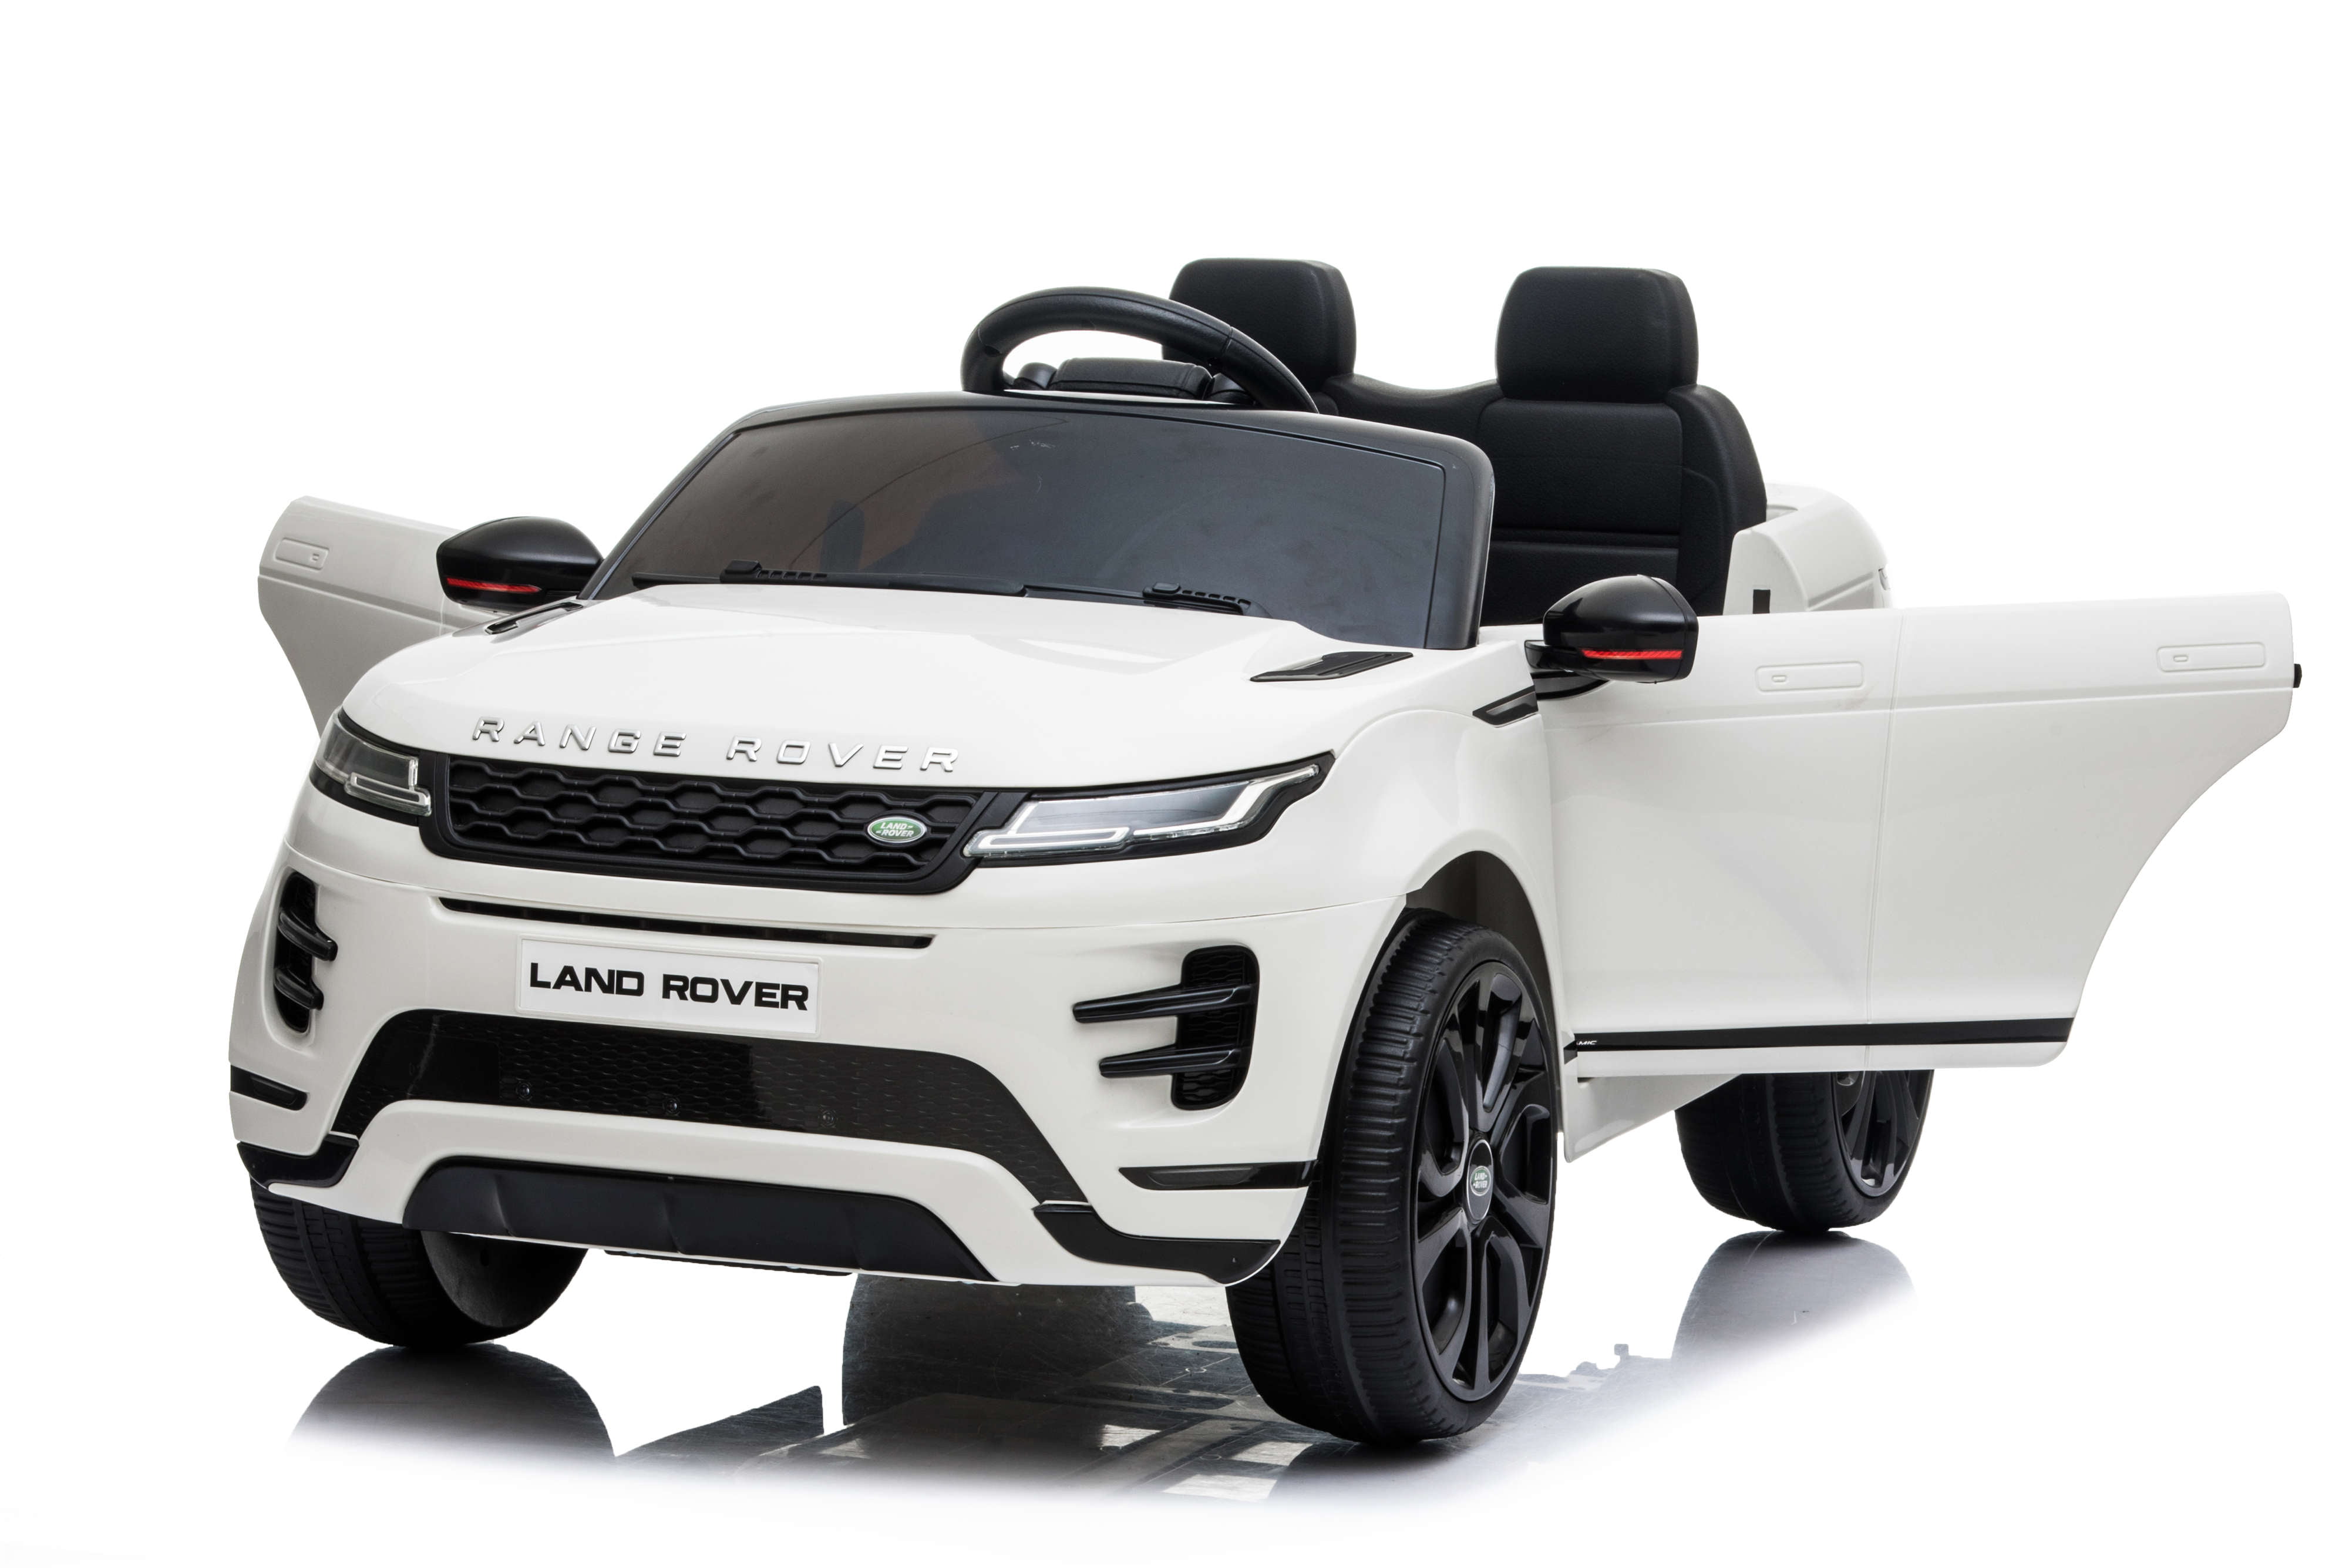 New Range Rover Evoque in Black or White